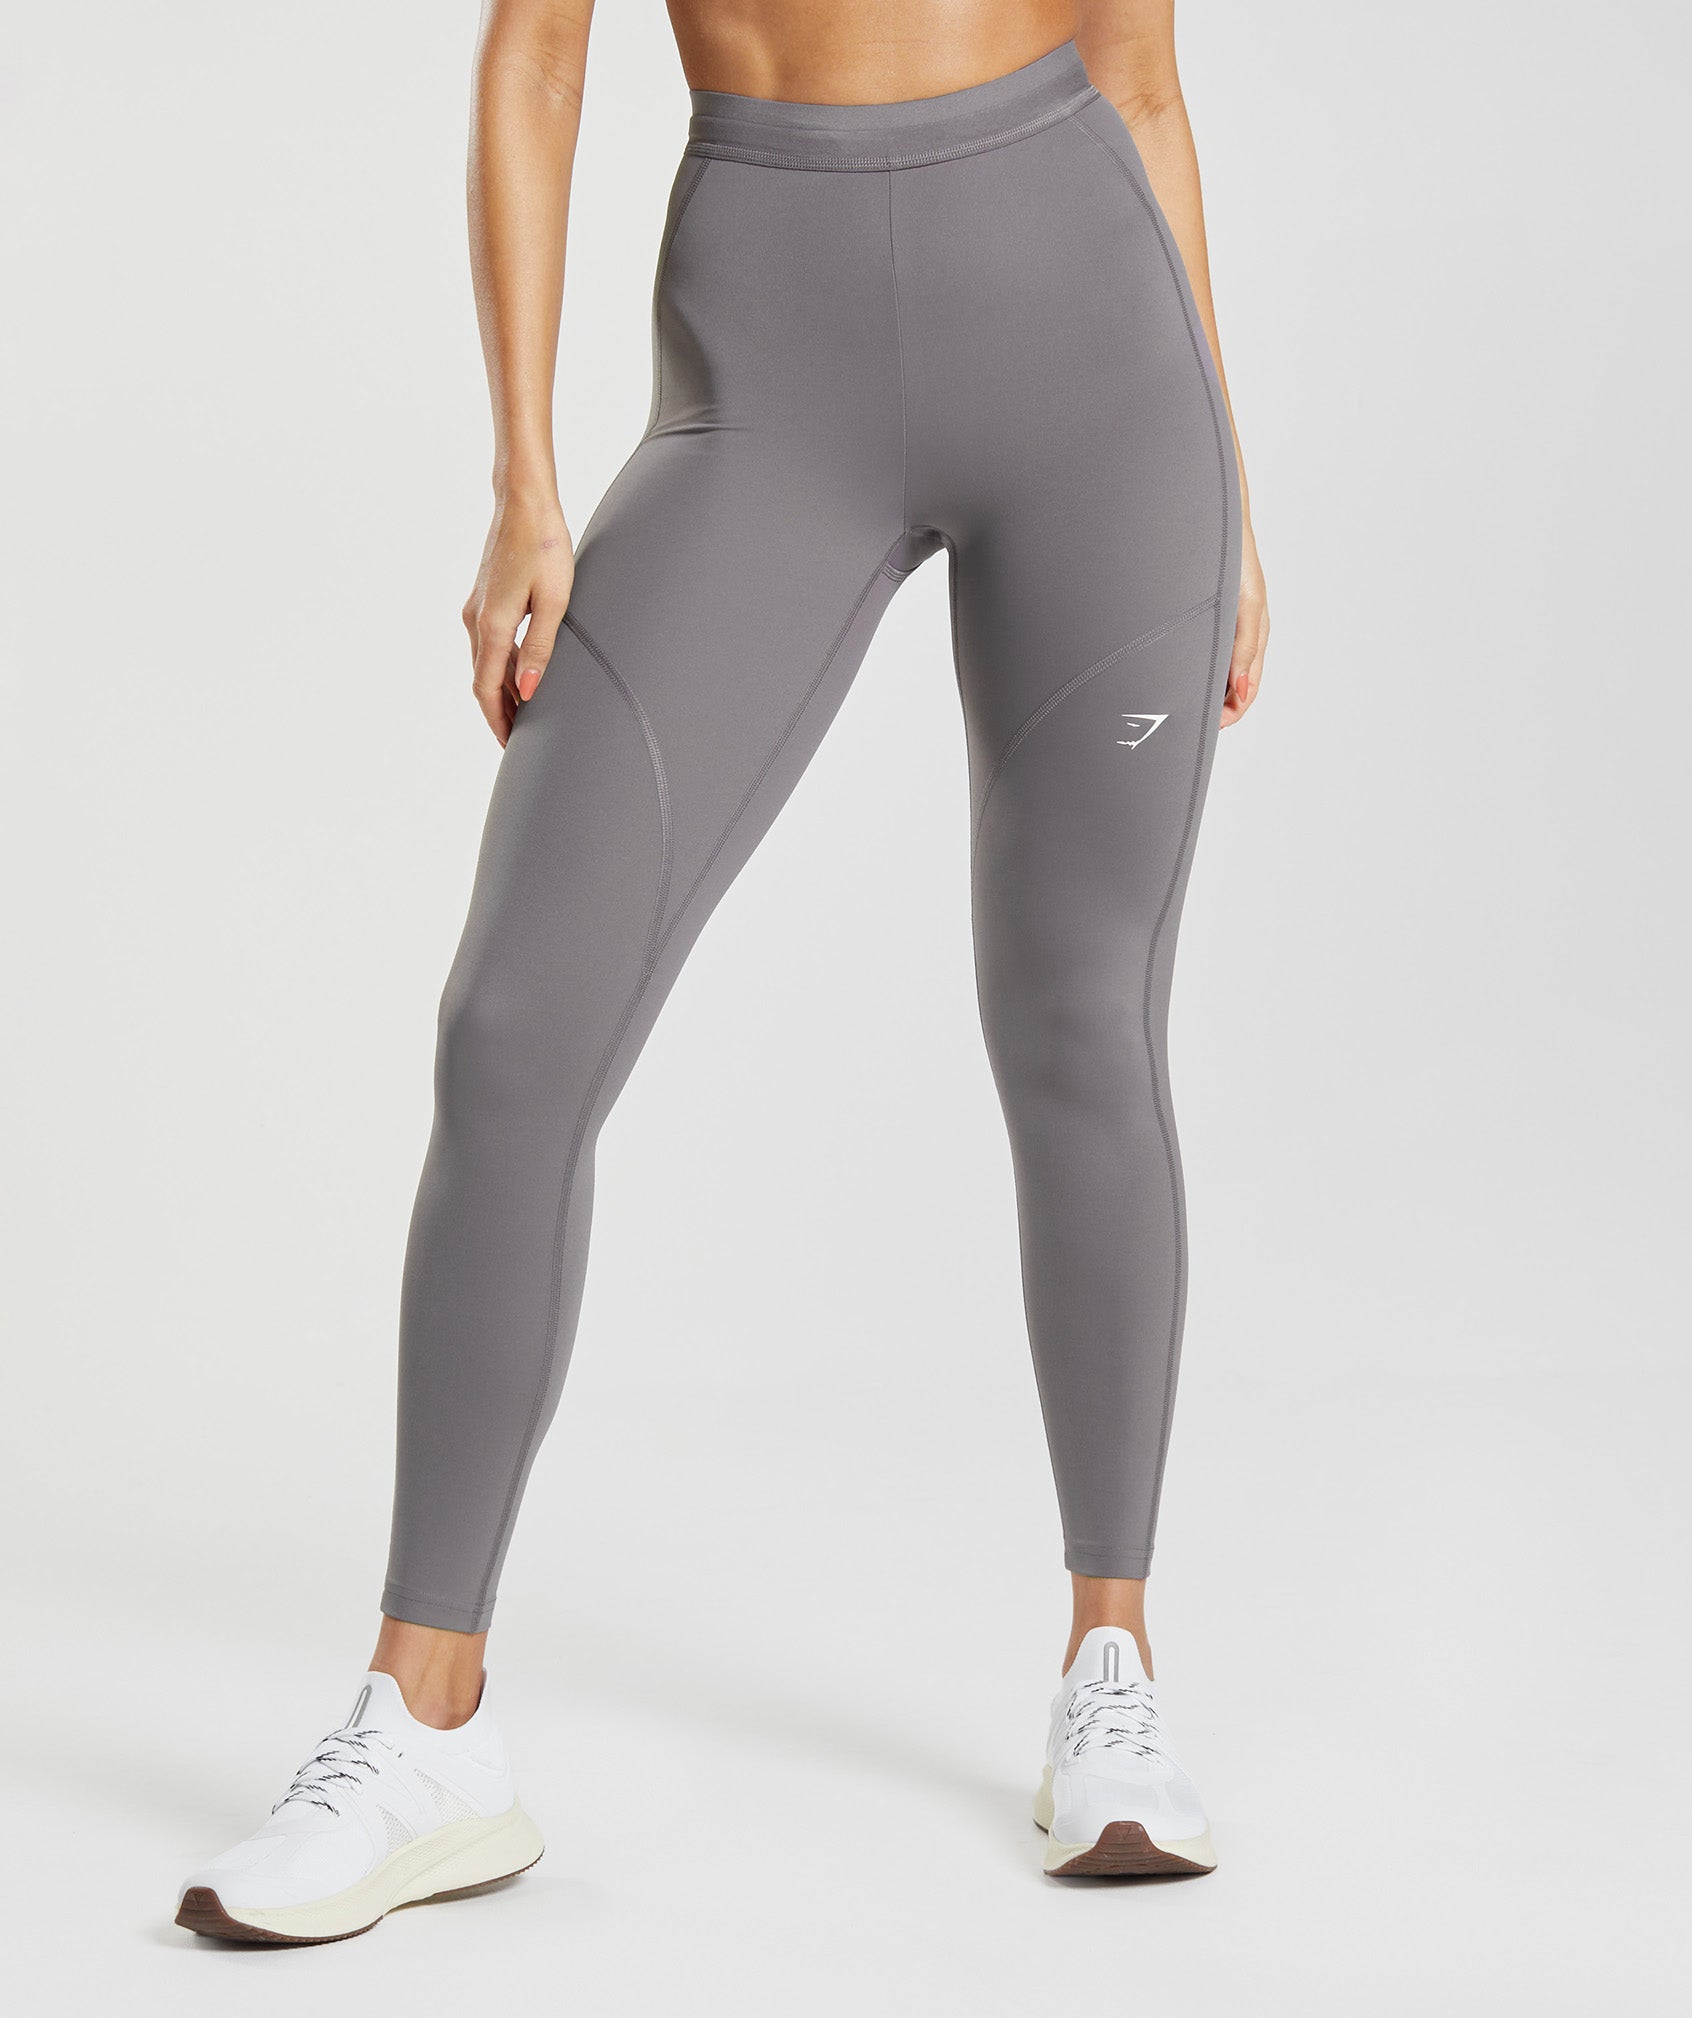 Authentic Legging Spring Grey Light – New Fitness USA